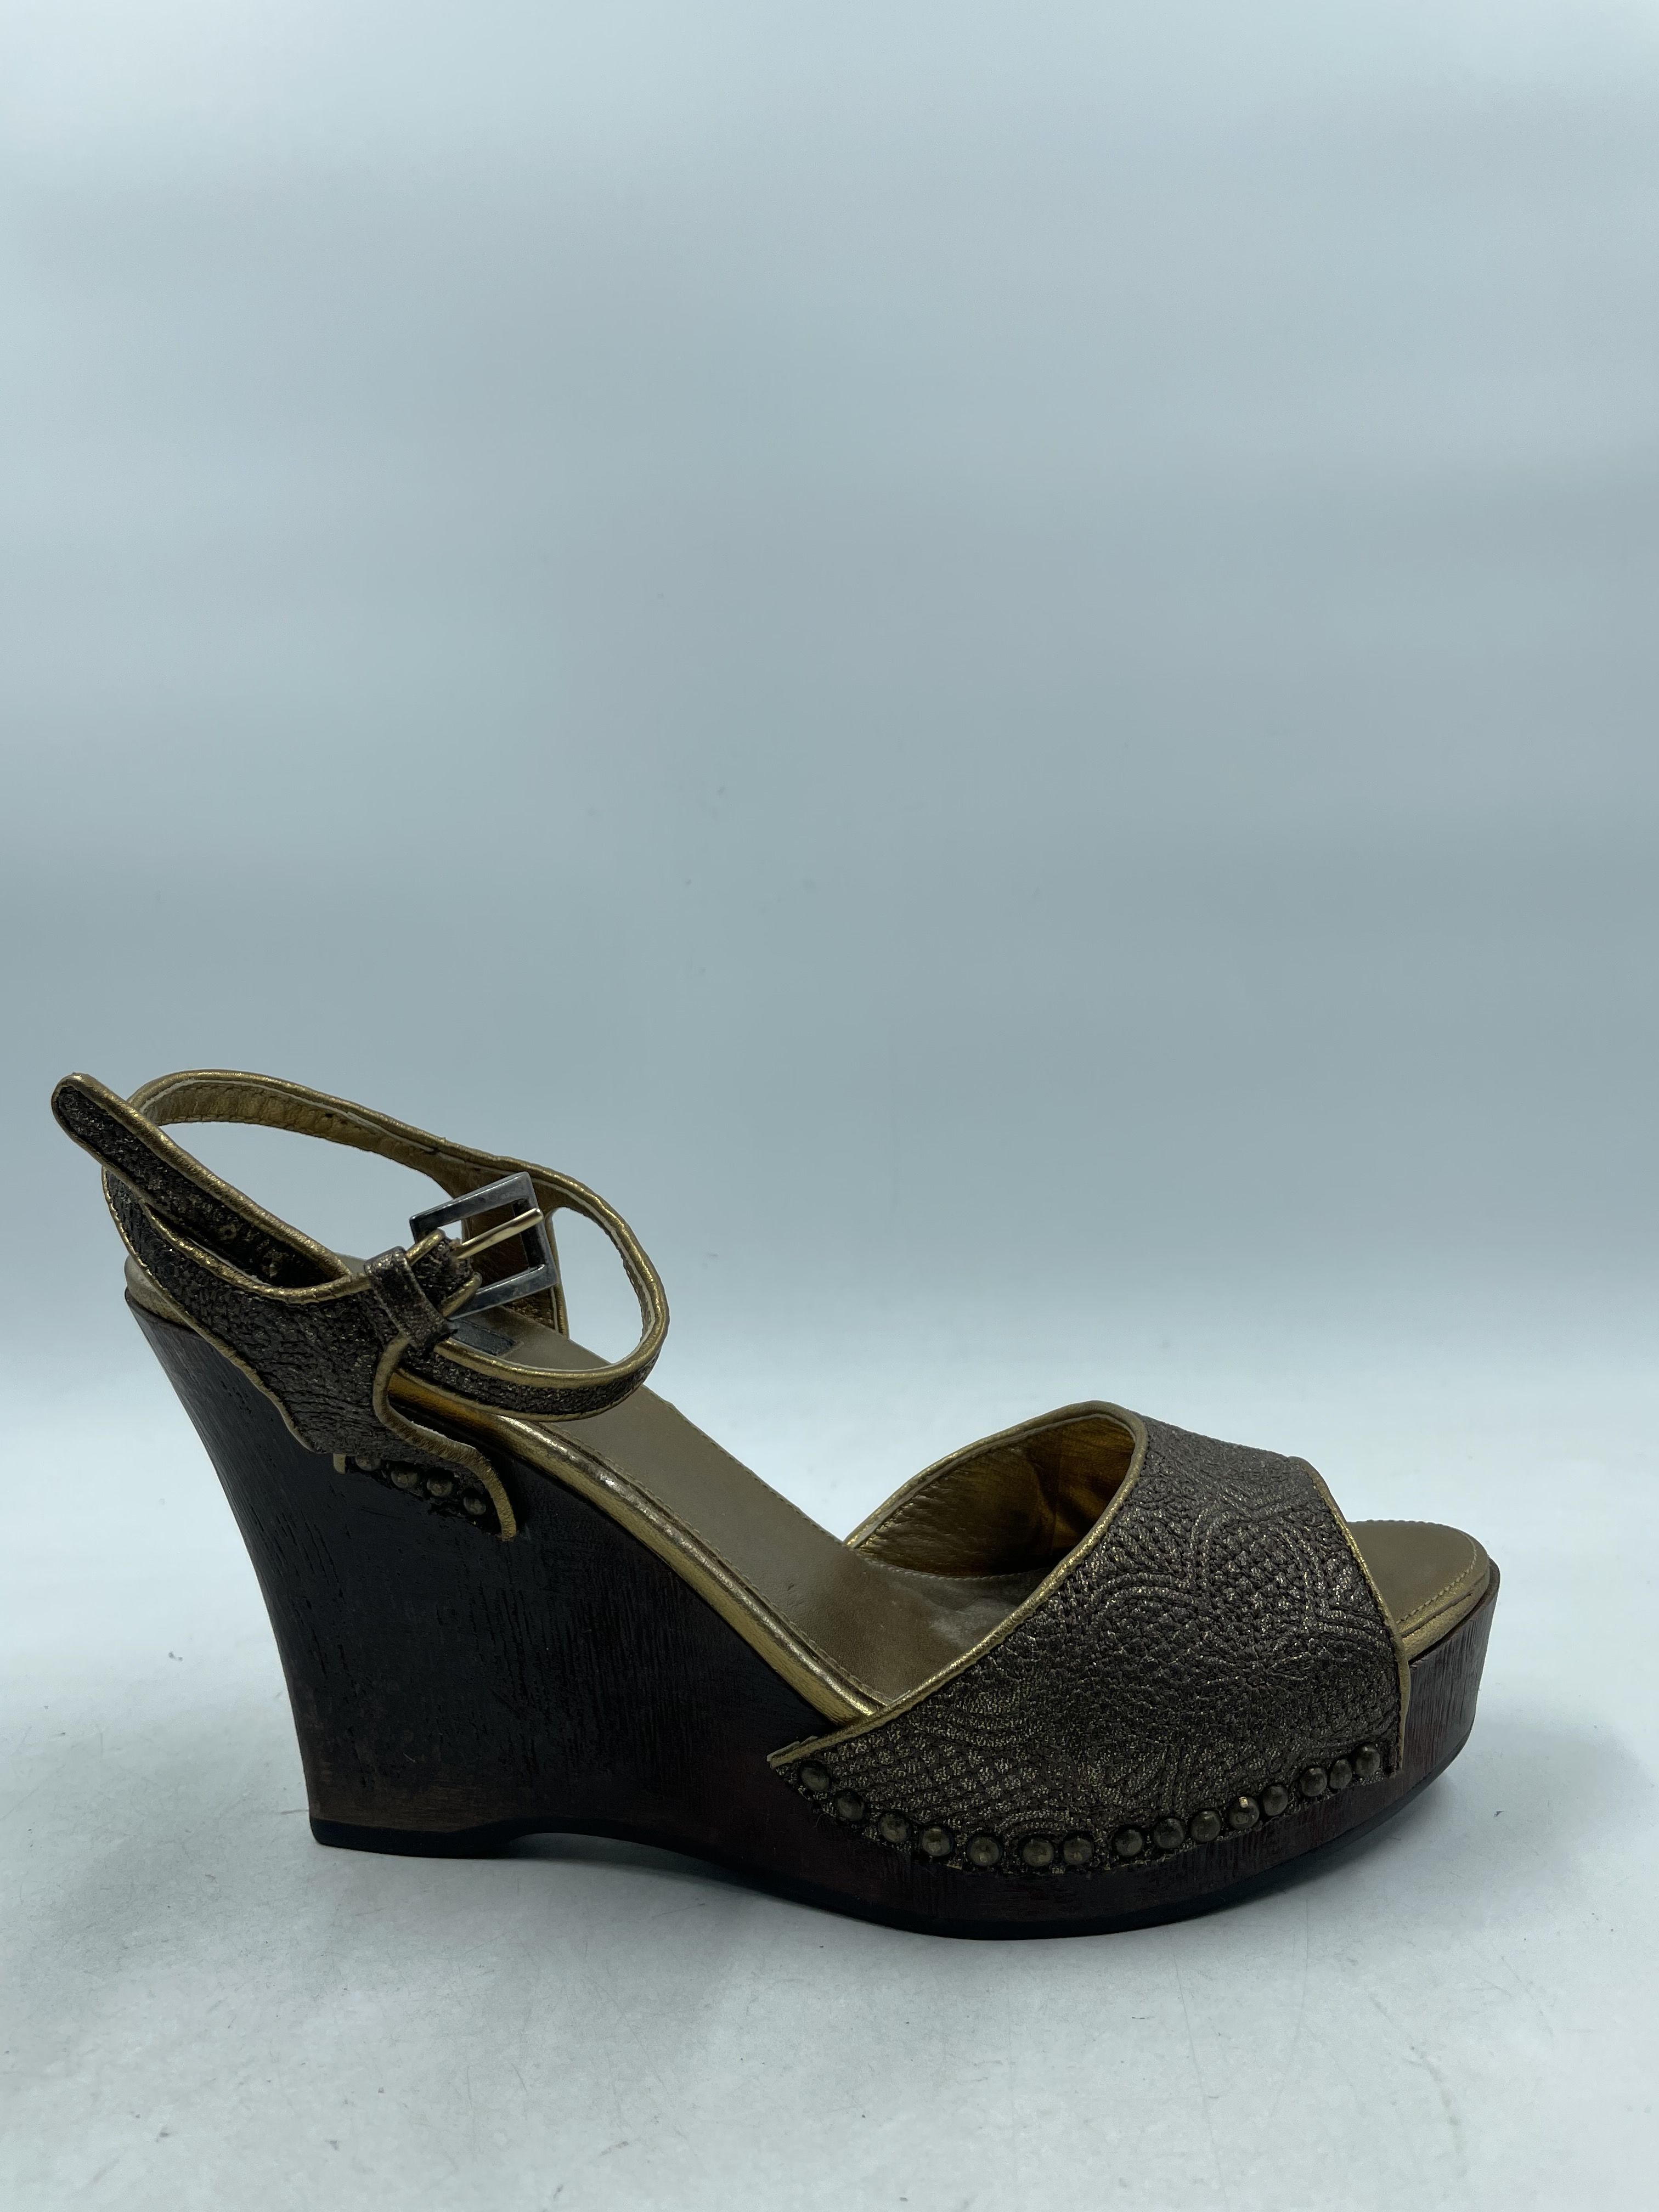 Glamorous Bronze Sandals For Women, Rhinestone Decor Wedge Sandals | SHEIN